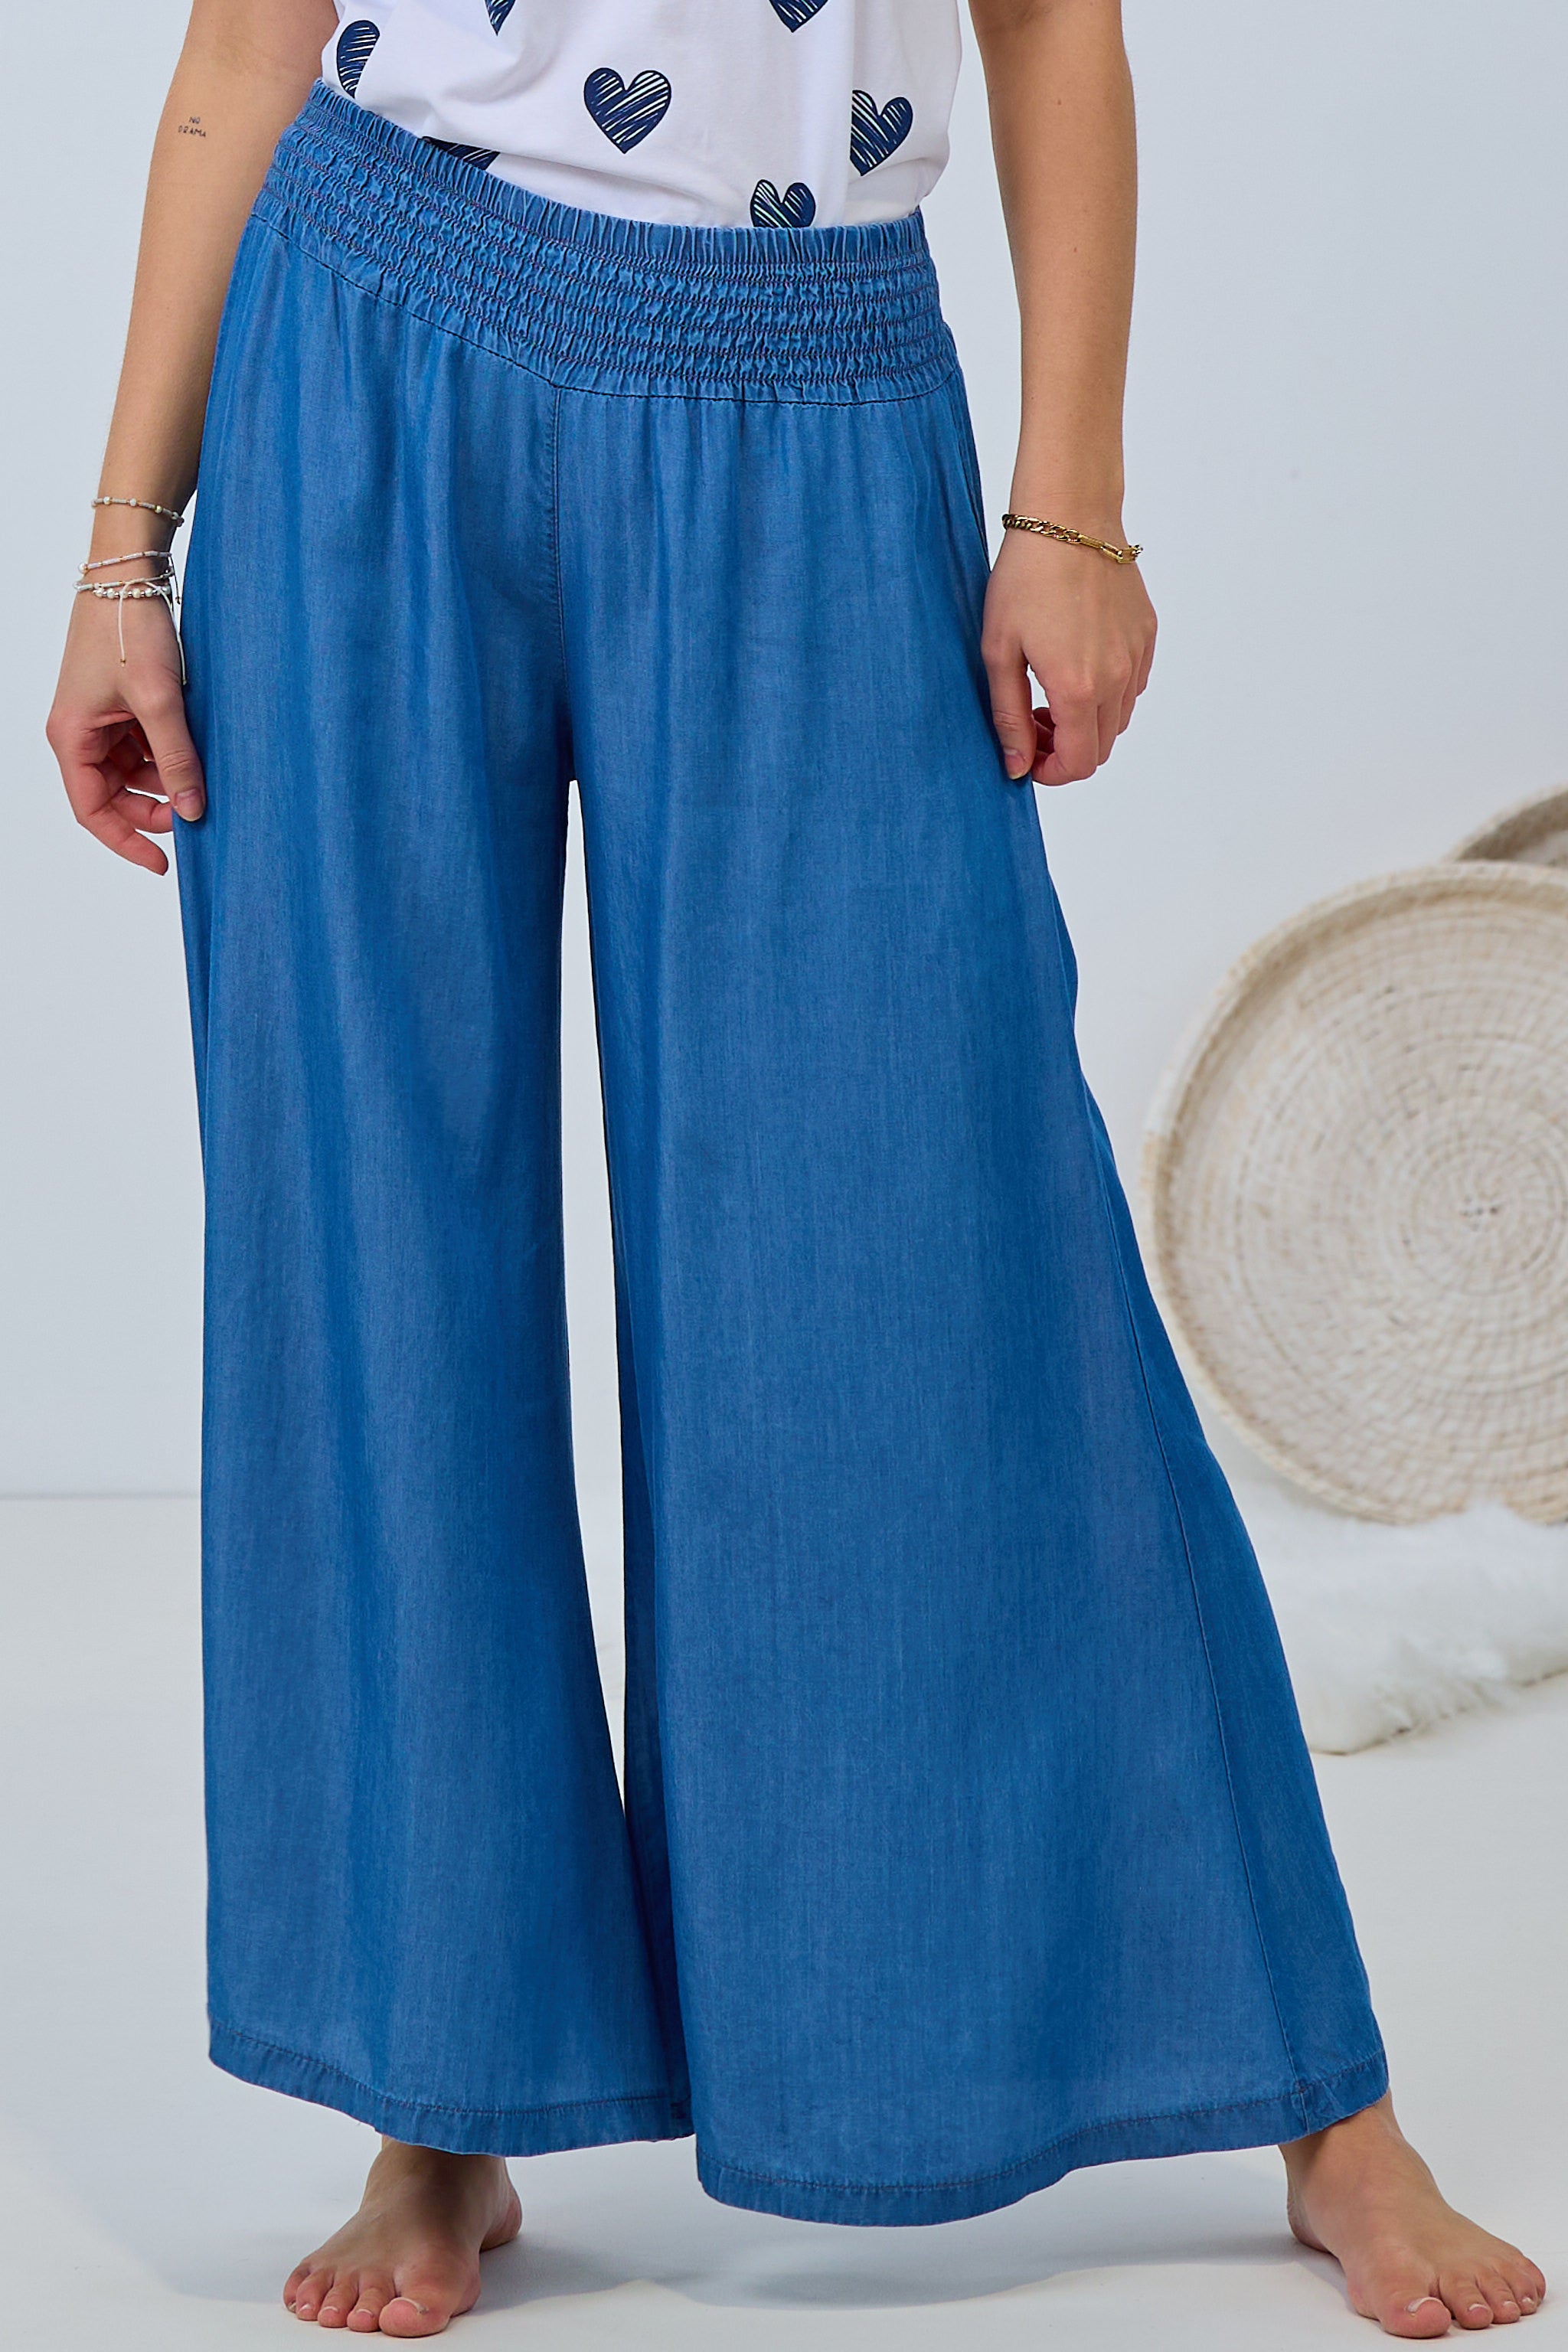 Damen Jeans Hosenrock blau Trends & Lifestyle